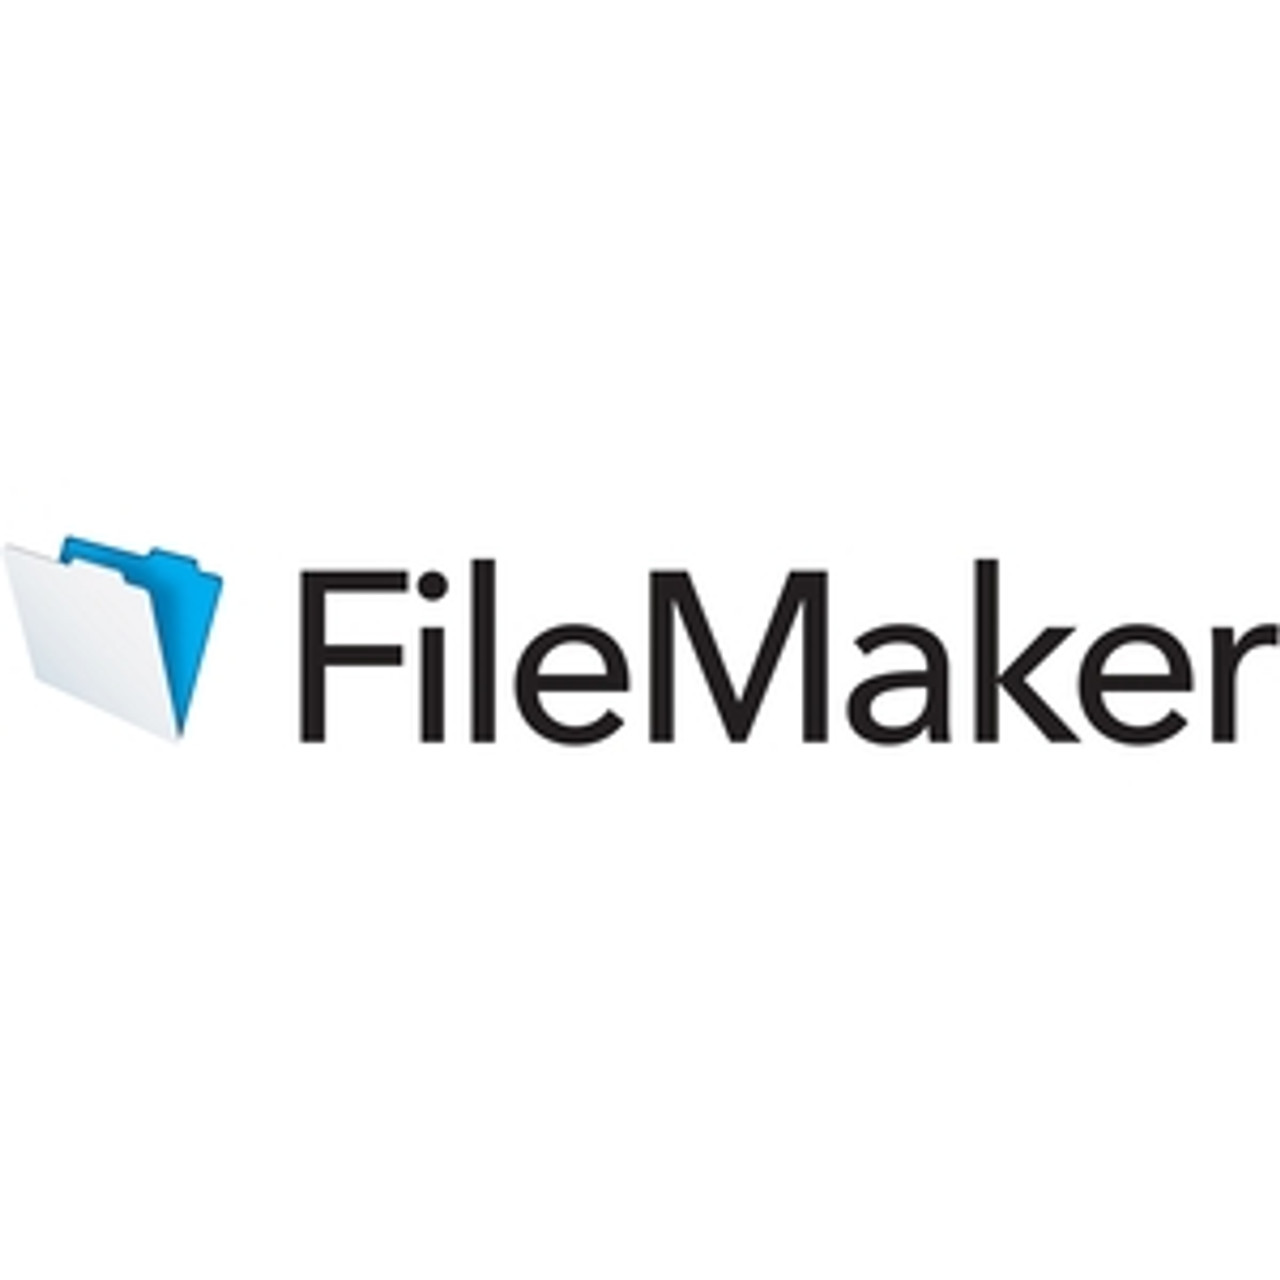 FileMaker 2023 + 3 Years Maintenance - Perpetual License - 20FP36VL7C0168